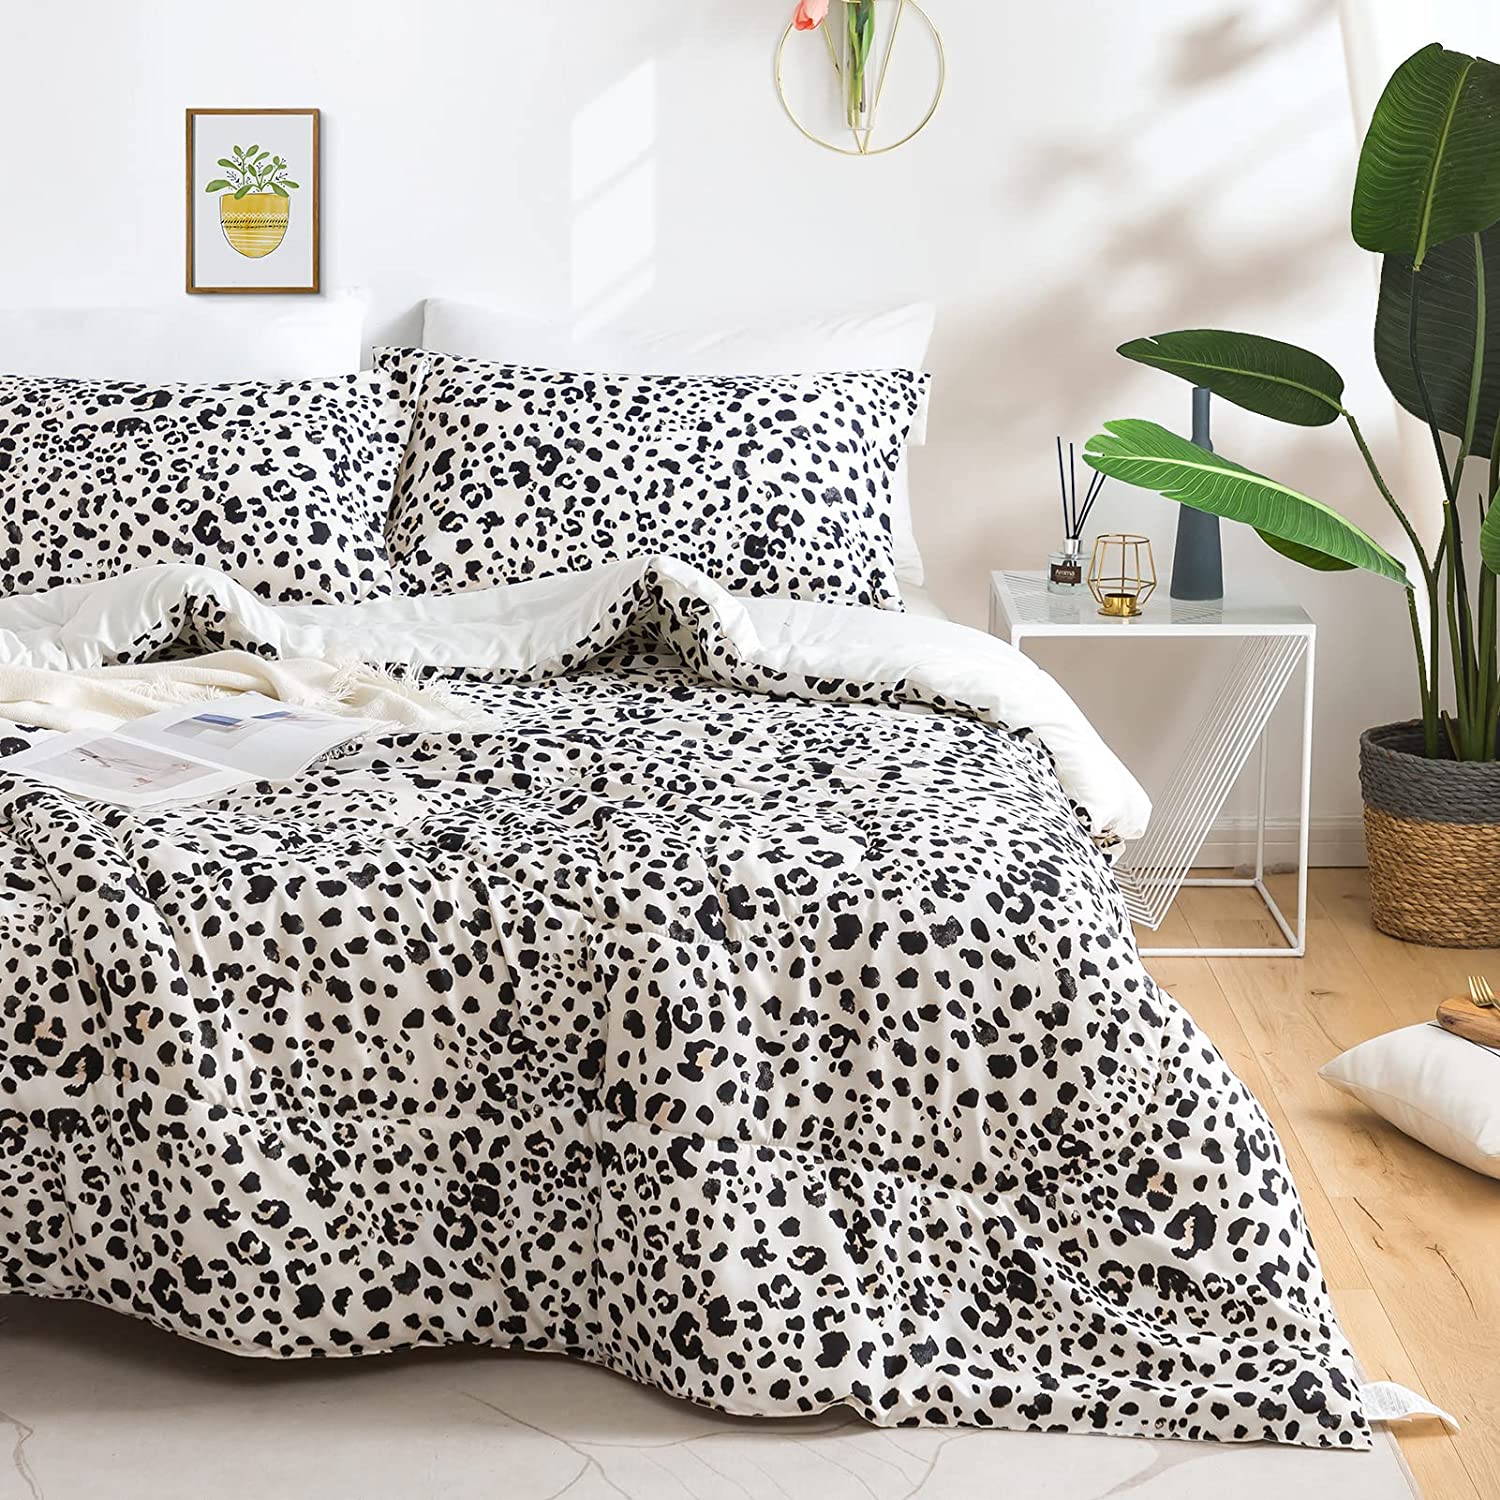 Bedding Sets King Size Comforter Set 3pc, Animal Pattern Printed Neutral  Hypoall | eBay